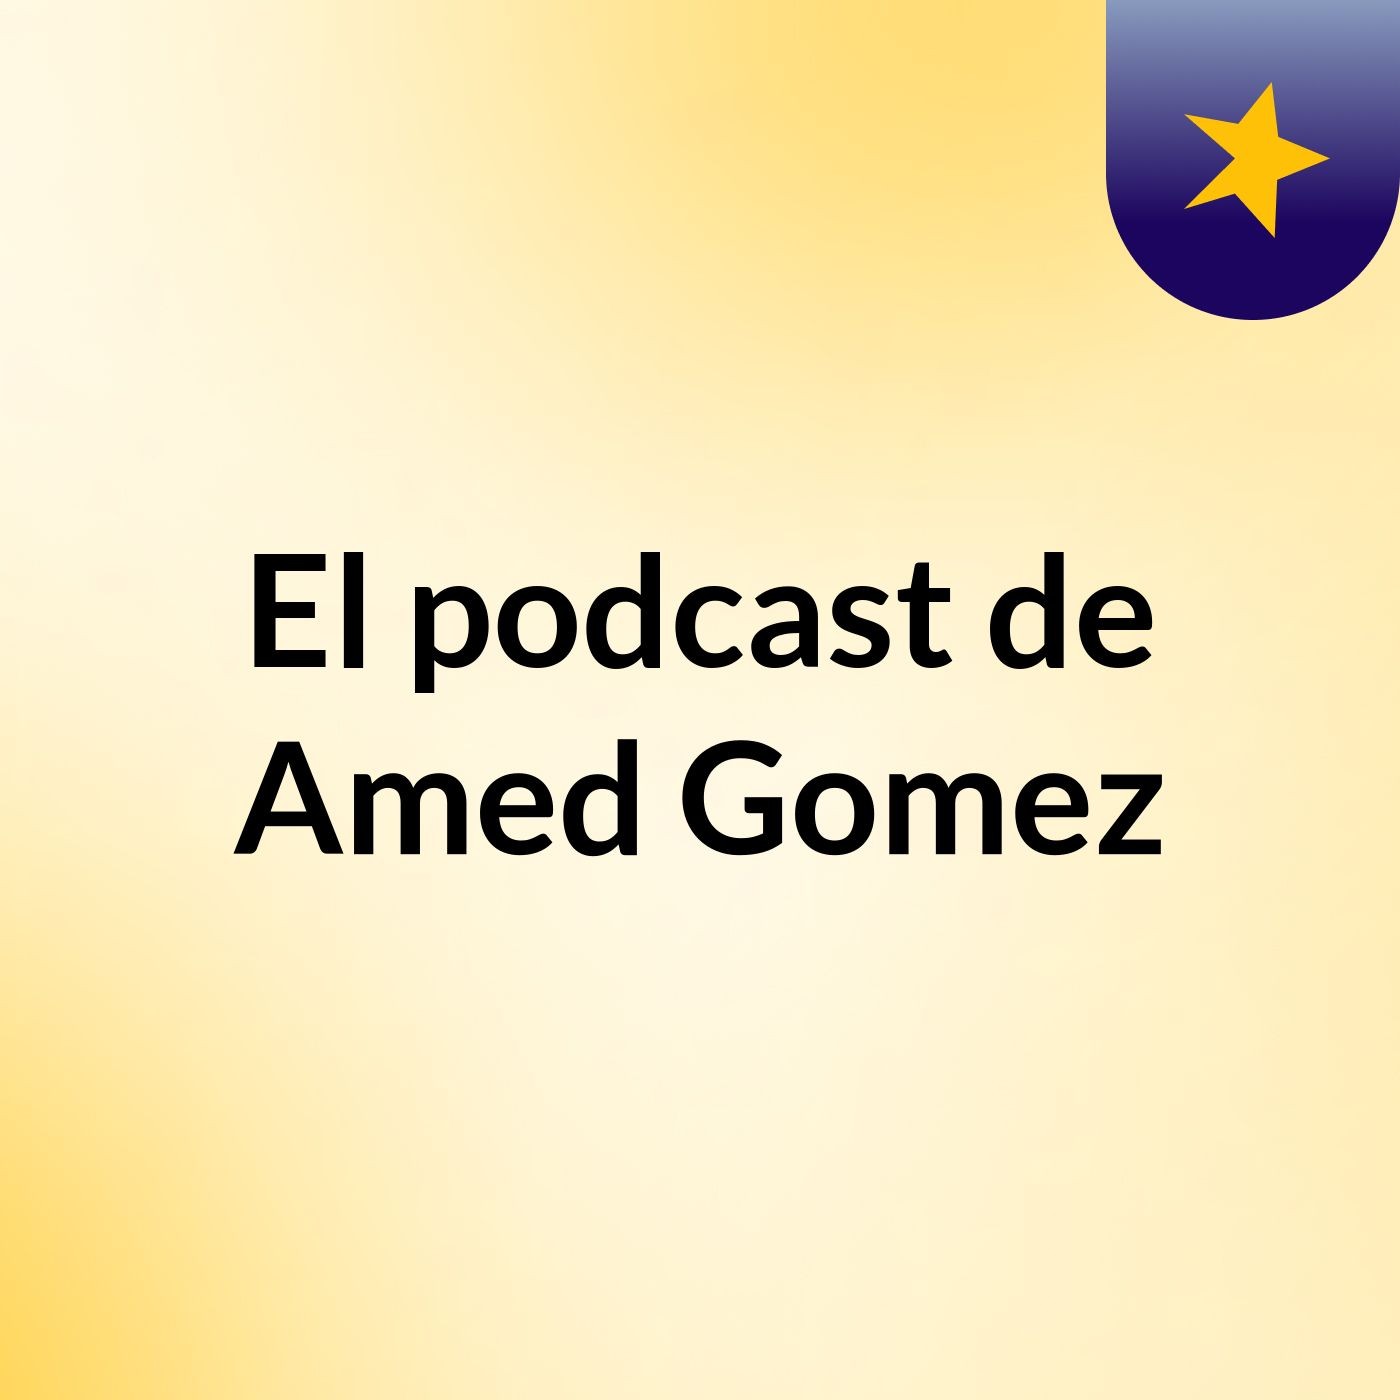 El podcast de Amed Gomez